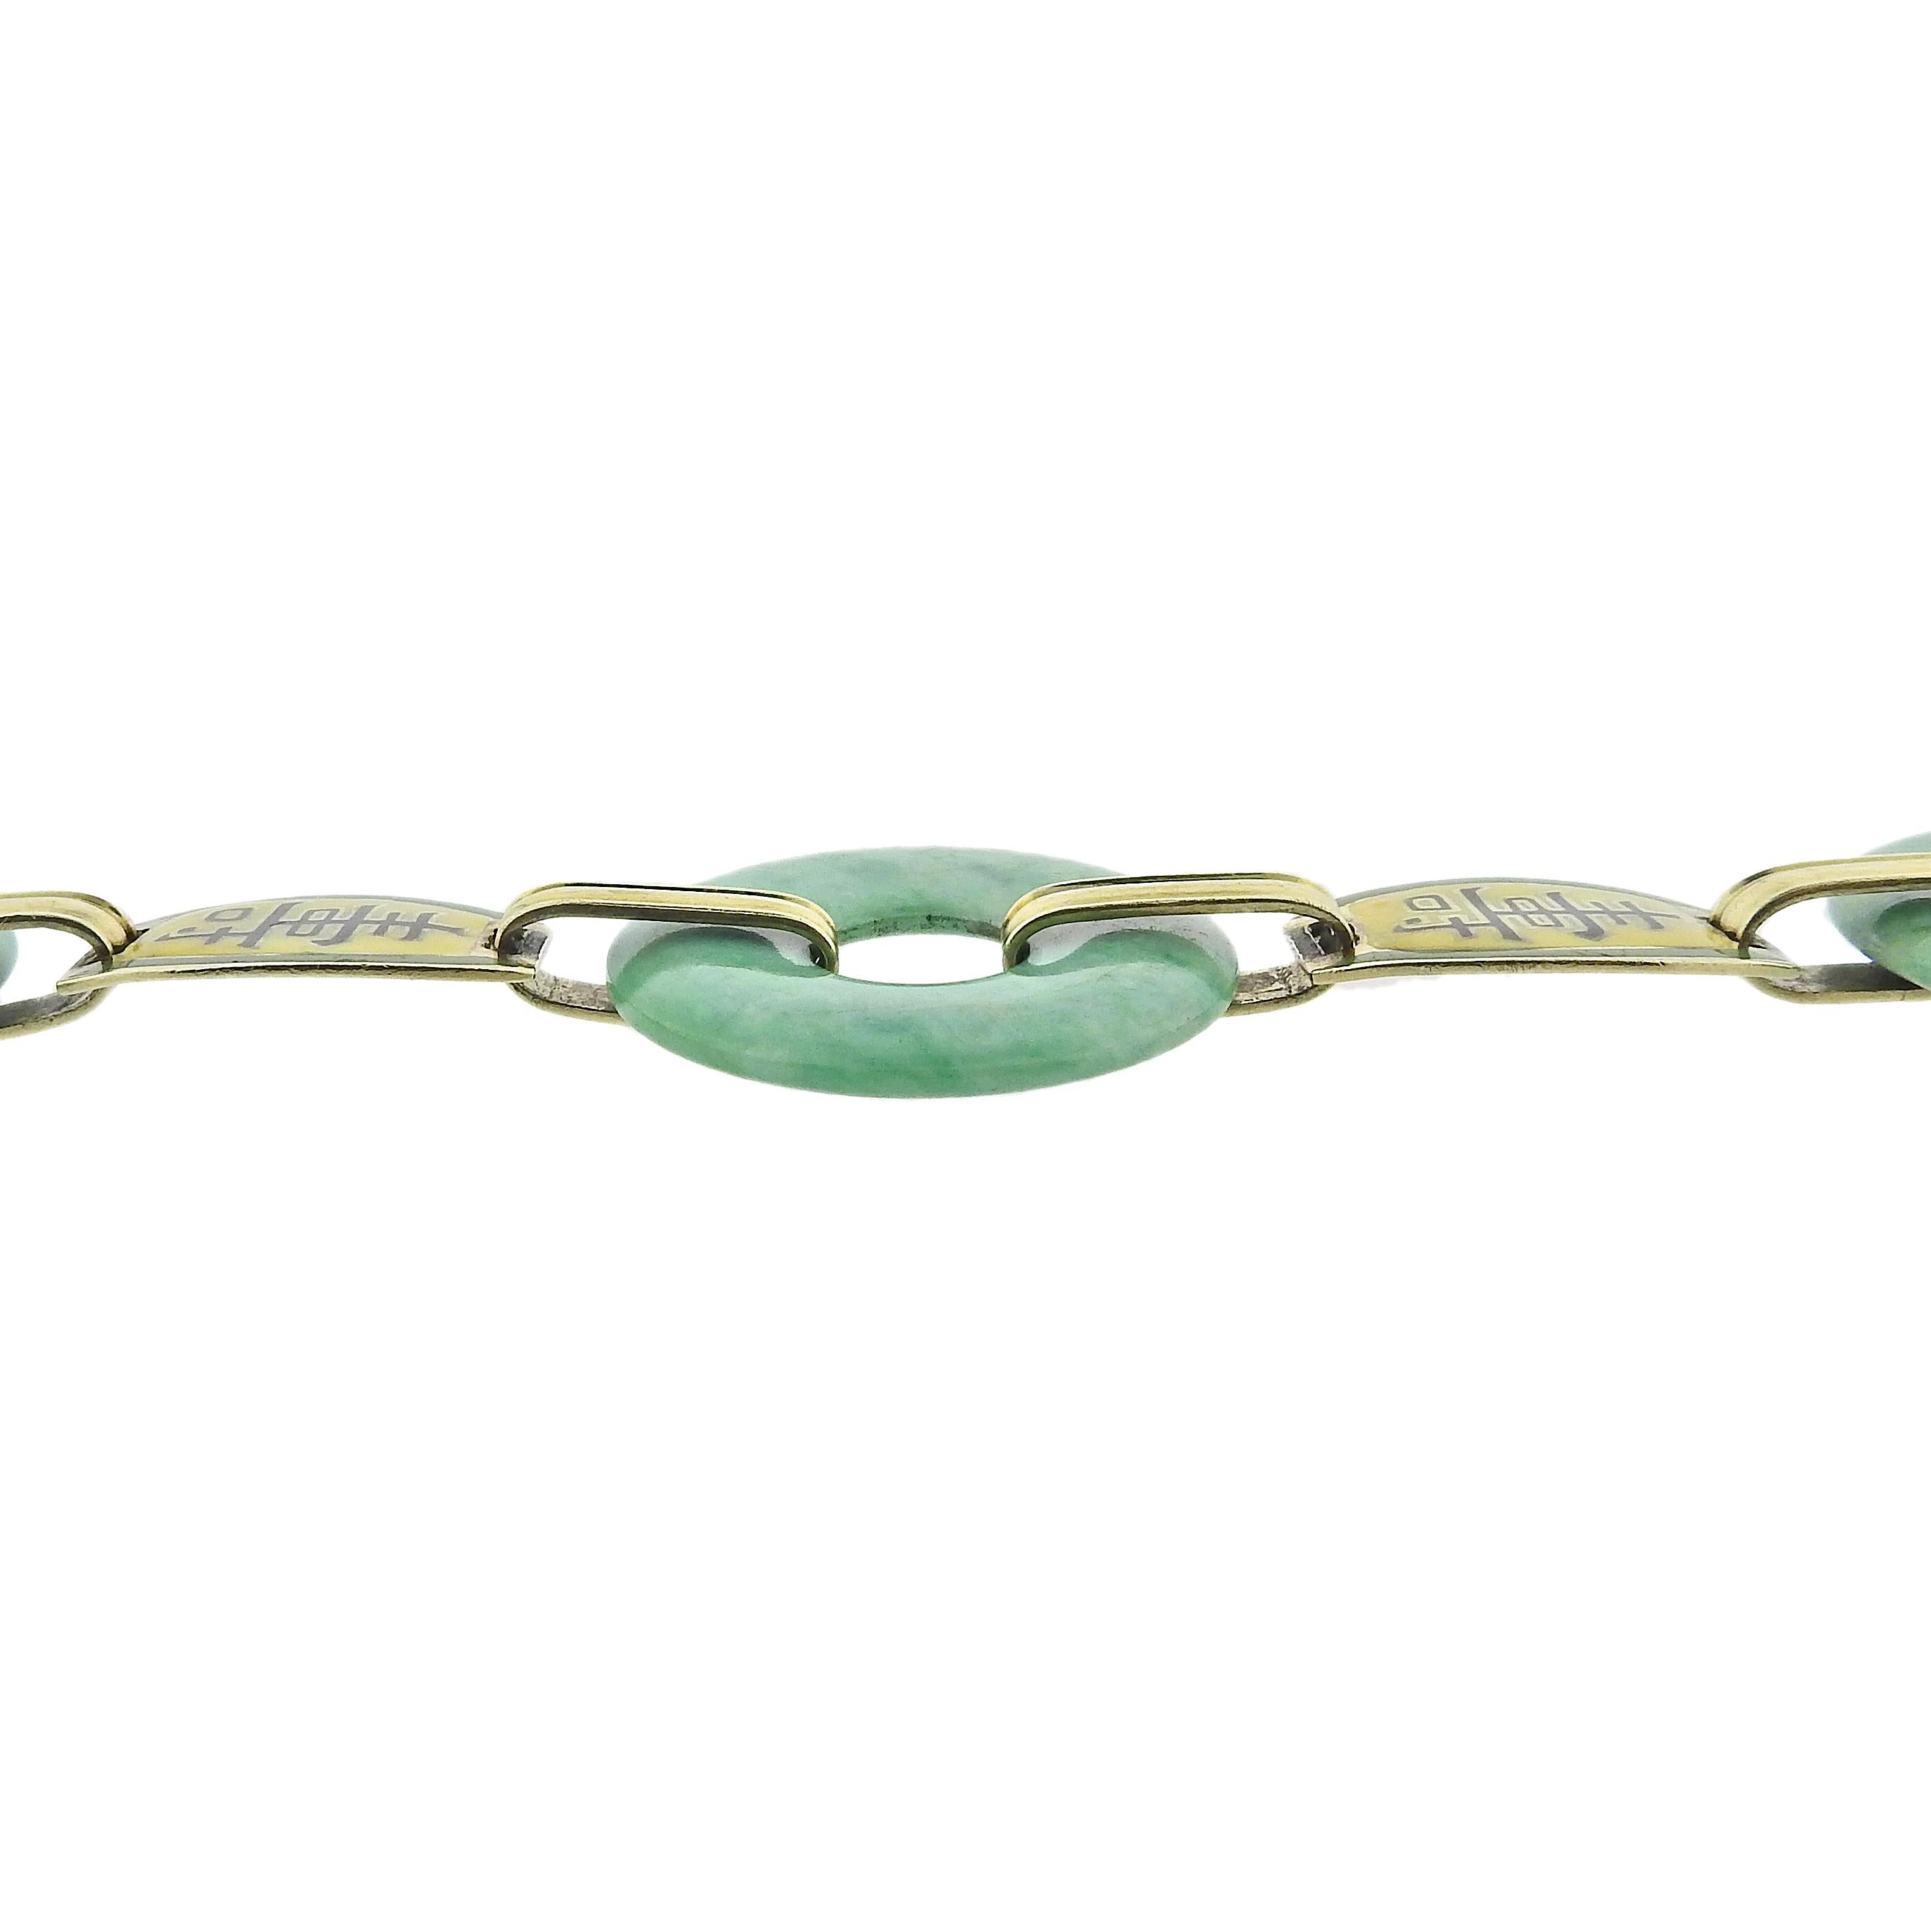 Art Deco 14k Gold Jade Enamel Bracelet. Bracelet measures 7.75